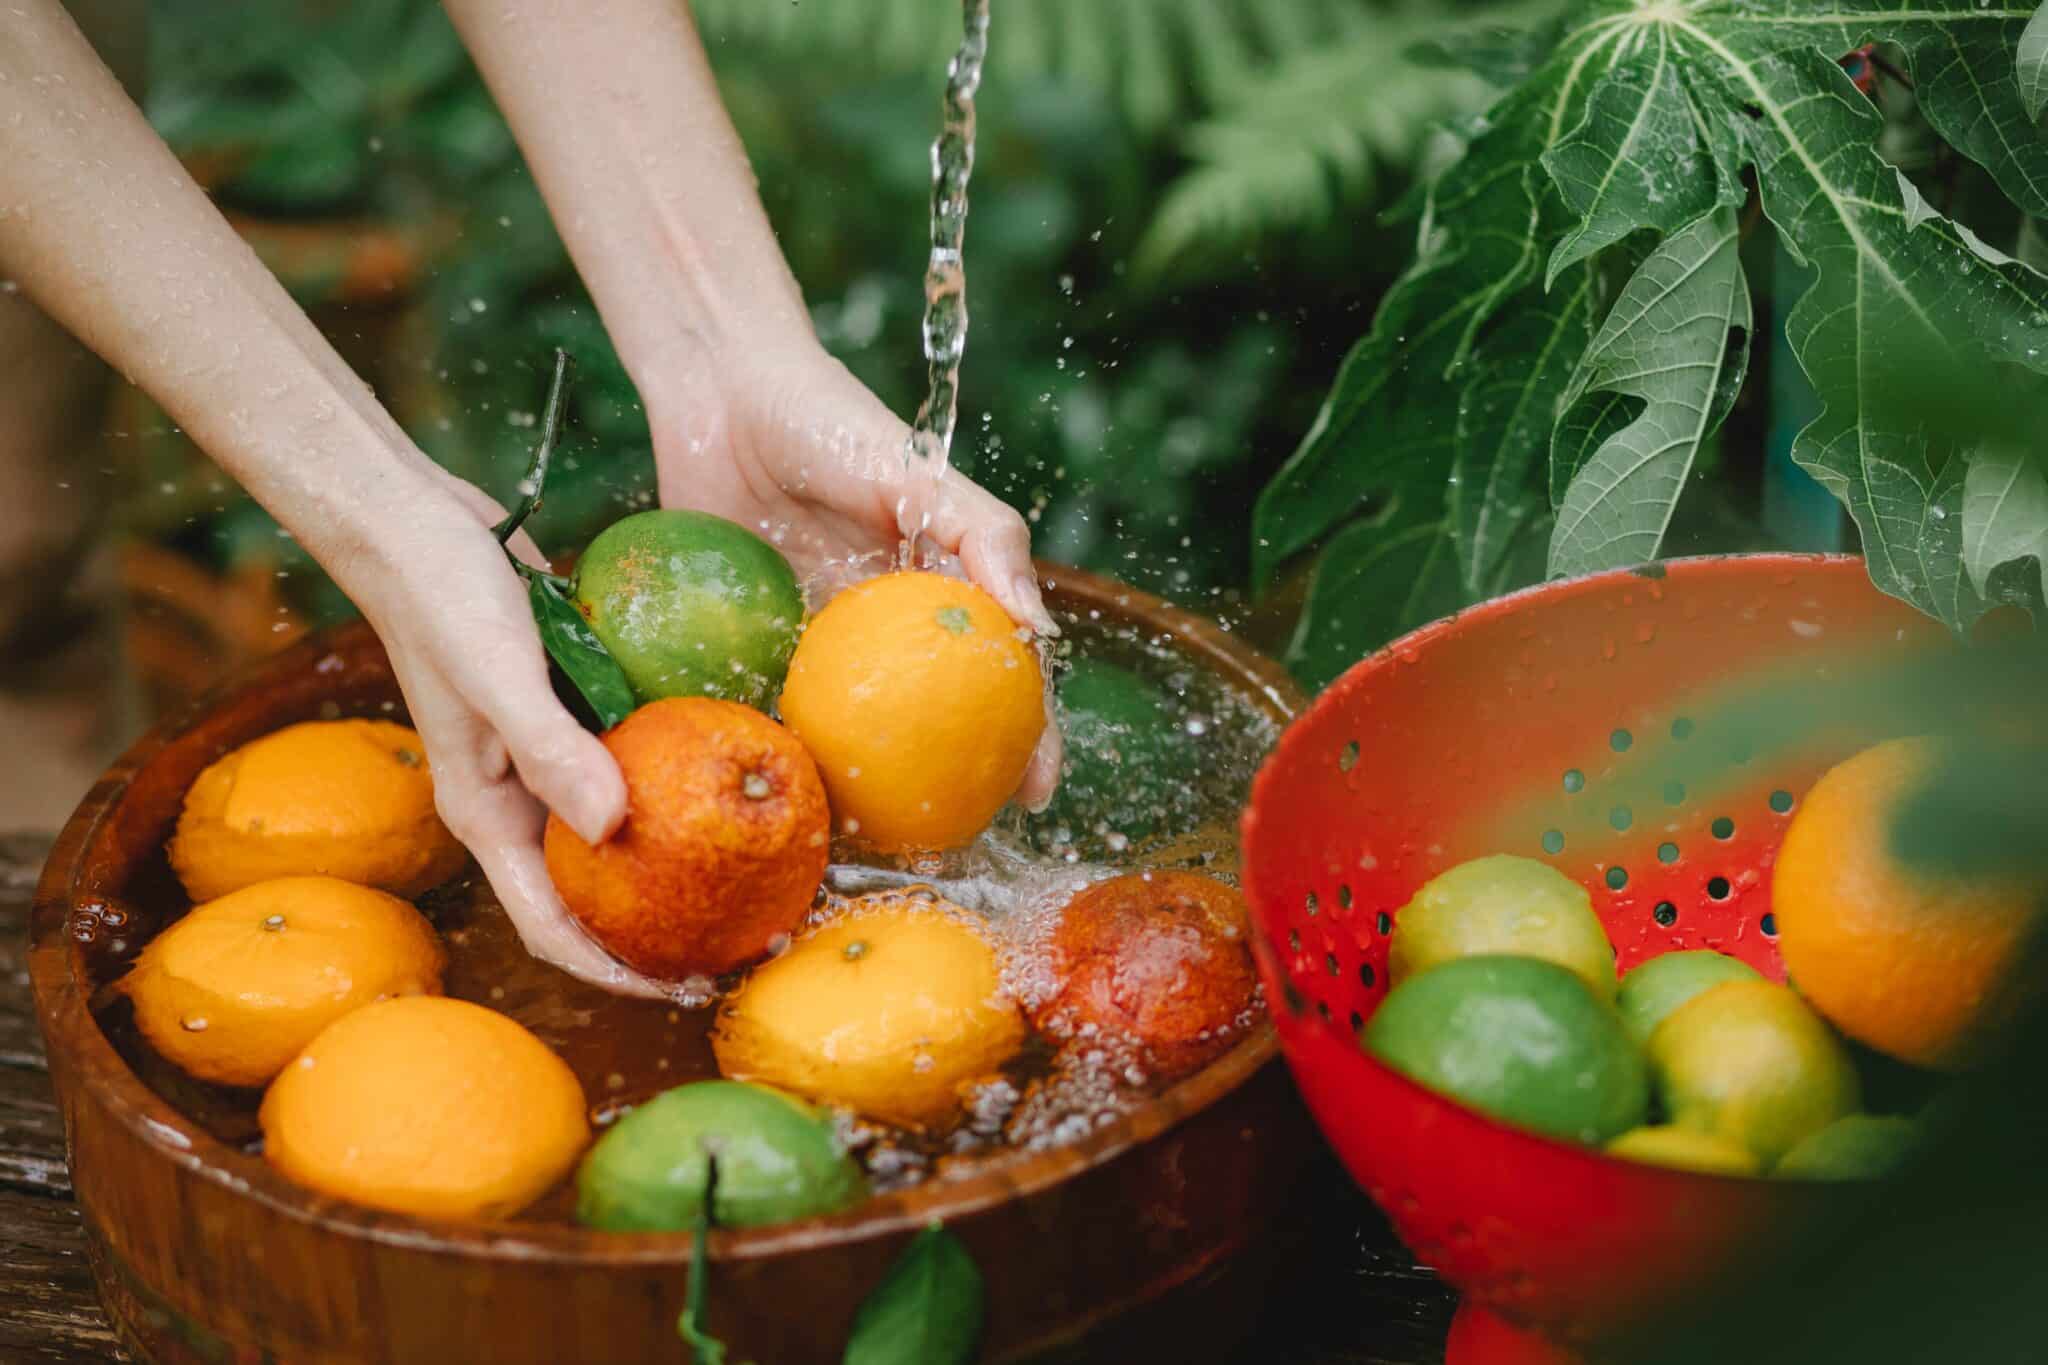 hands washing fruits near greenery